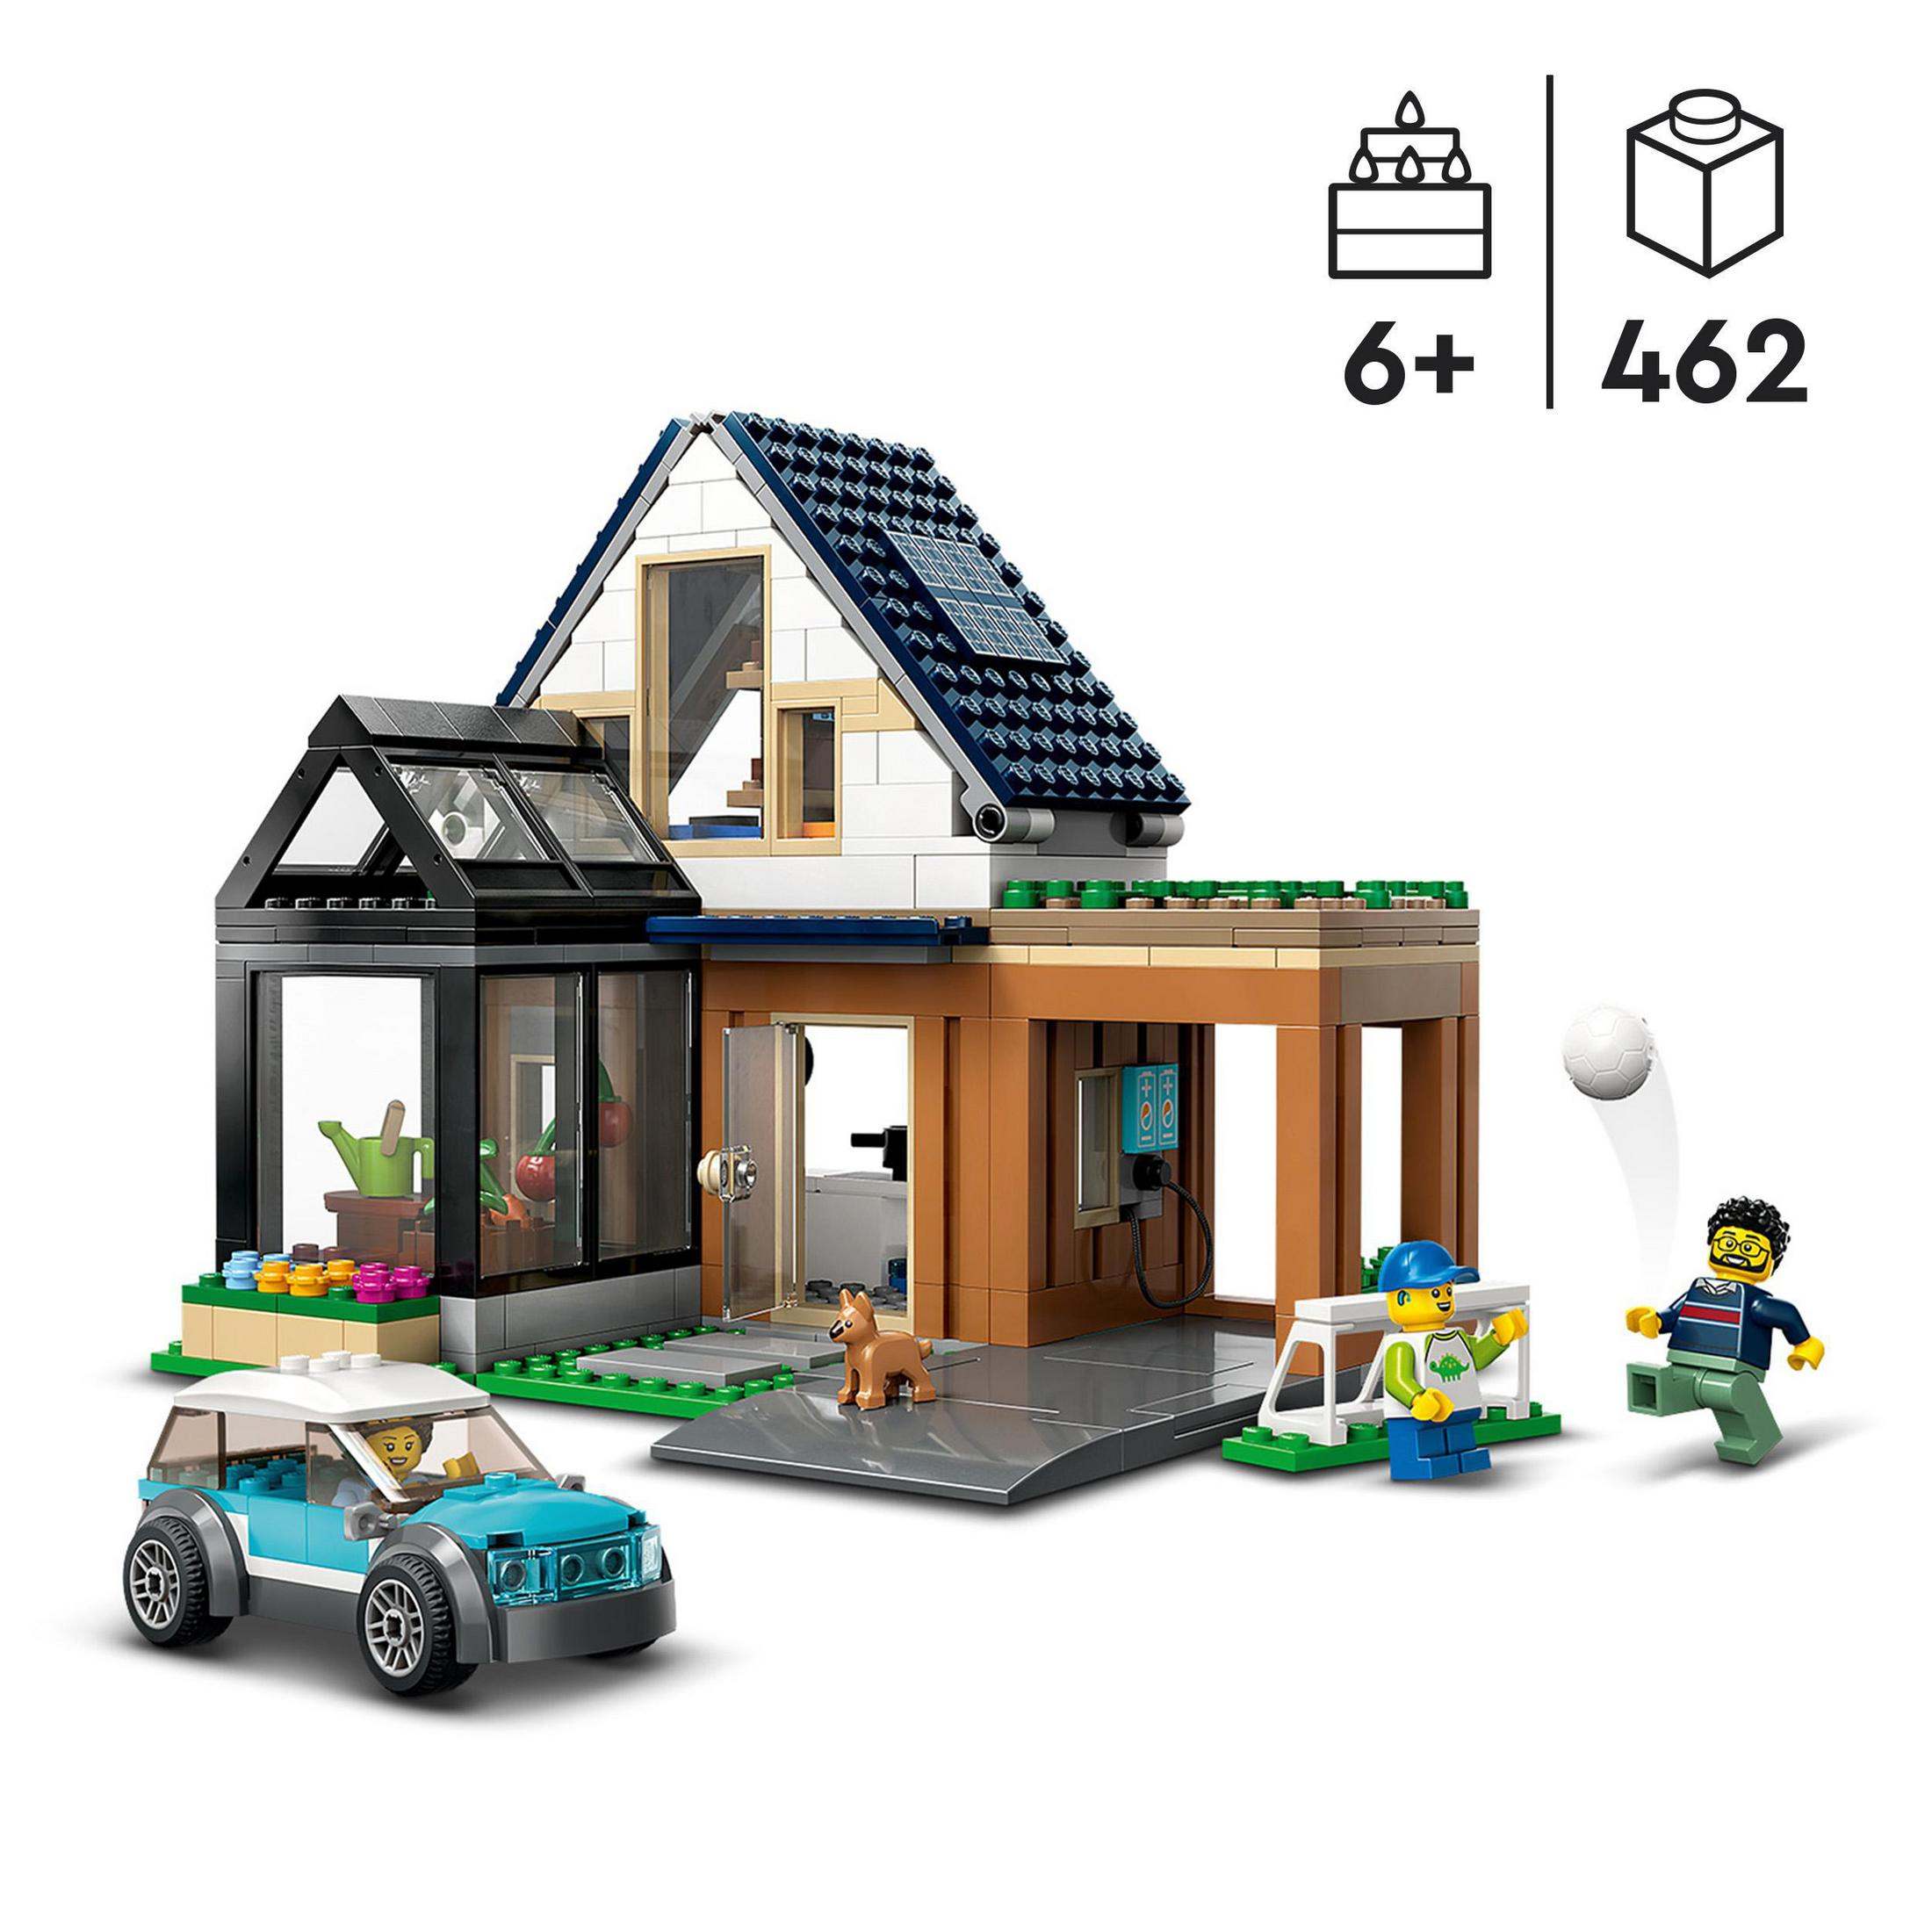 Mehrfarbig FAMILIENHAUS MIT ELEKTROAUTO LEGO 60398 Bausatz,